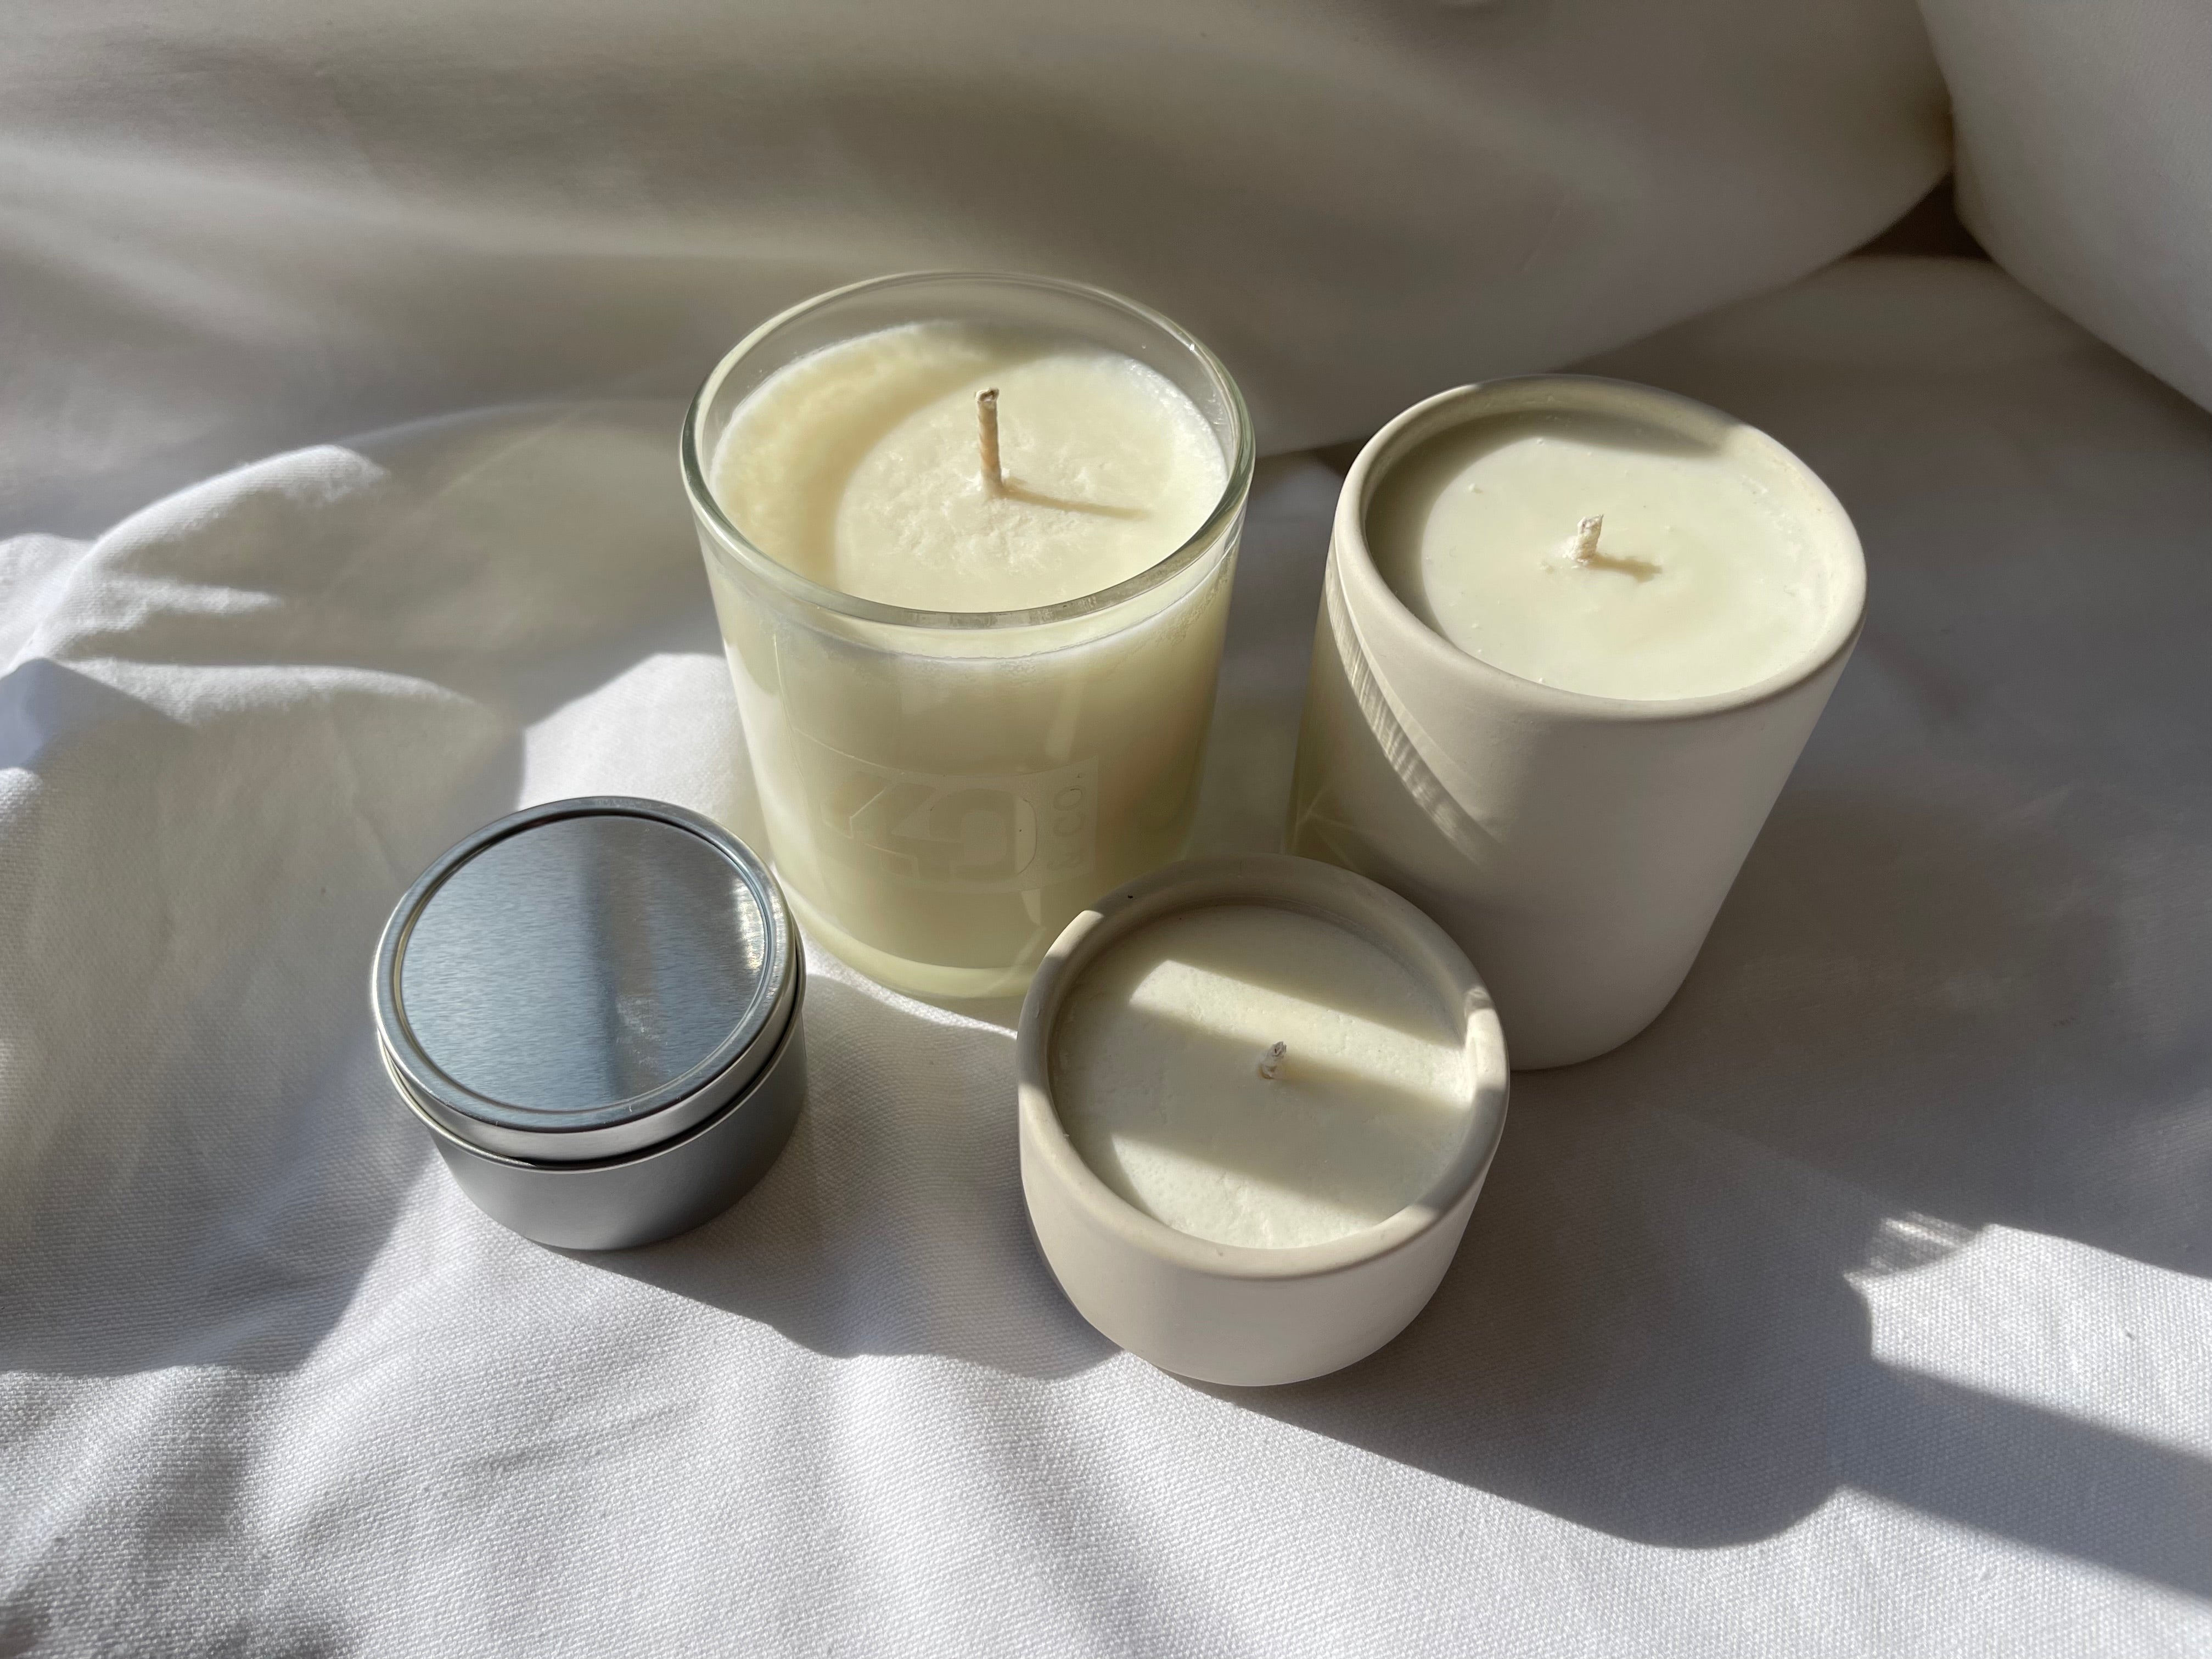 mount lemmon candle | multiple options